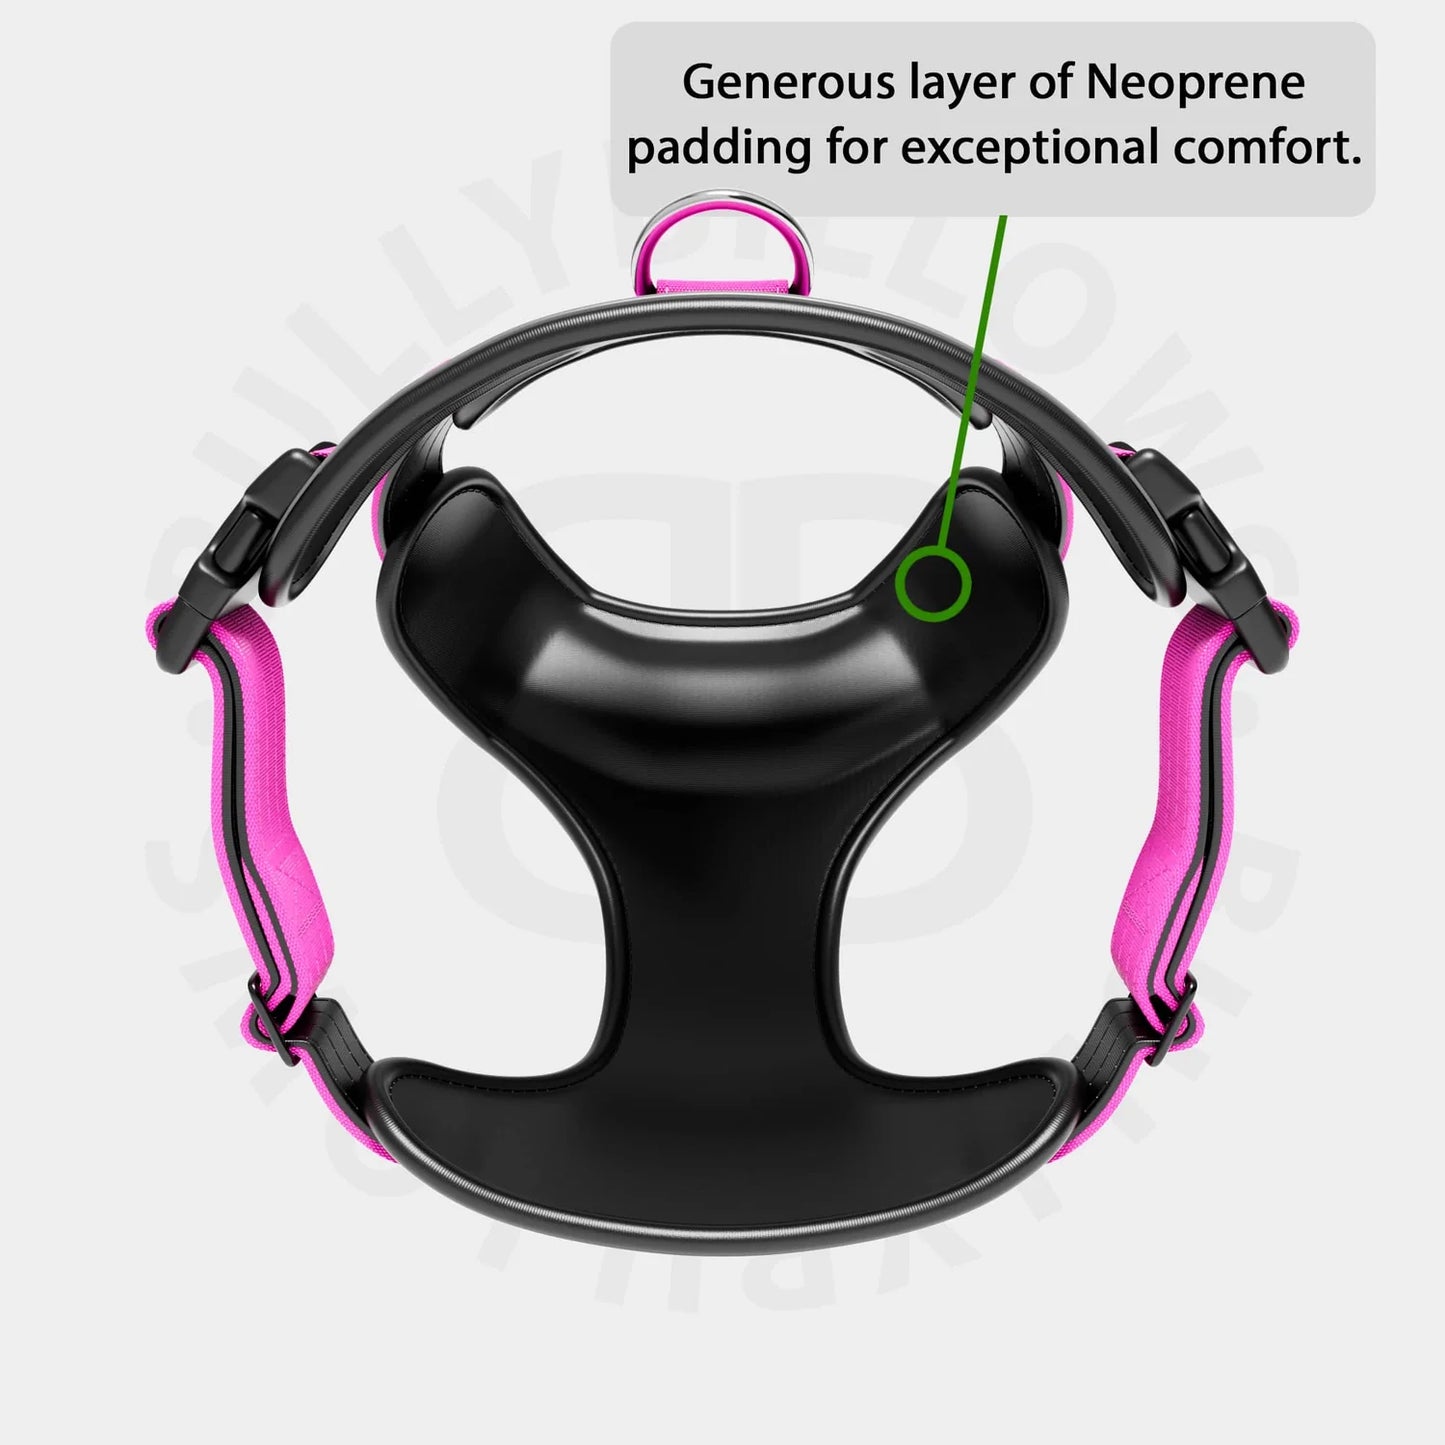 Neoprene Lining Inside Bullybillows Premium Strong Dog Harness in Magenta Pink